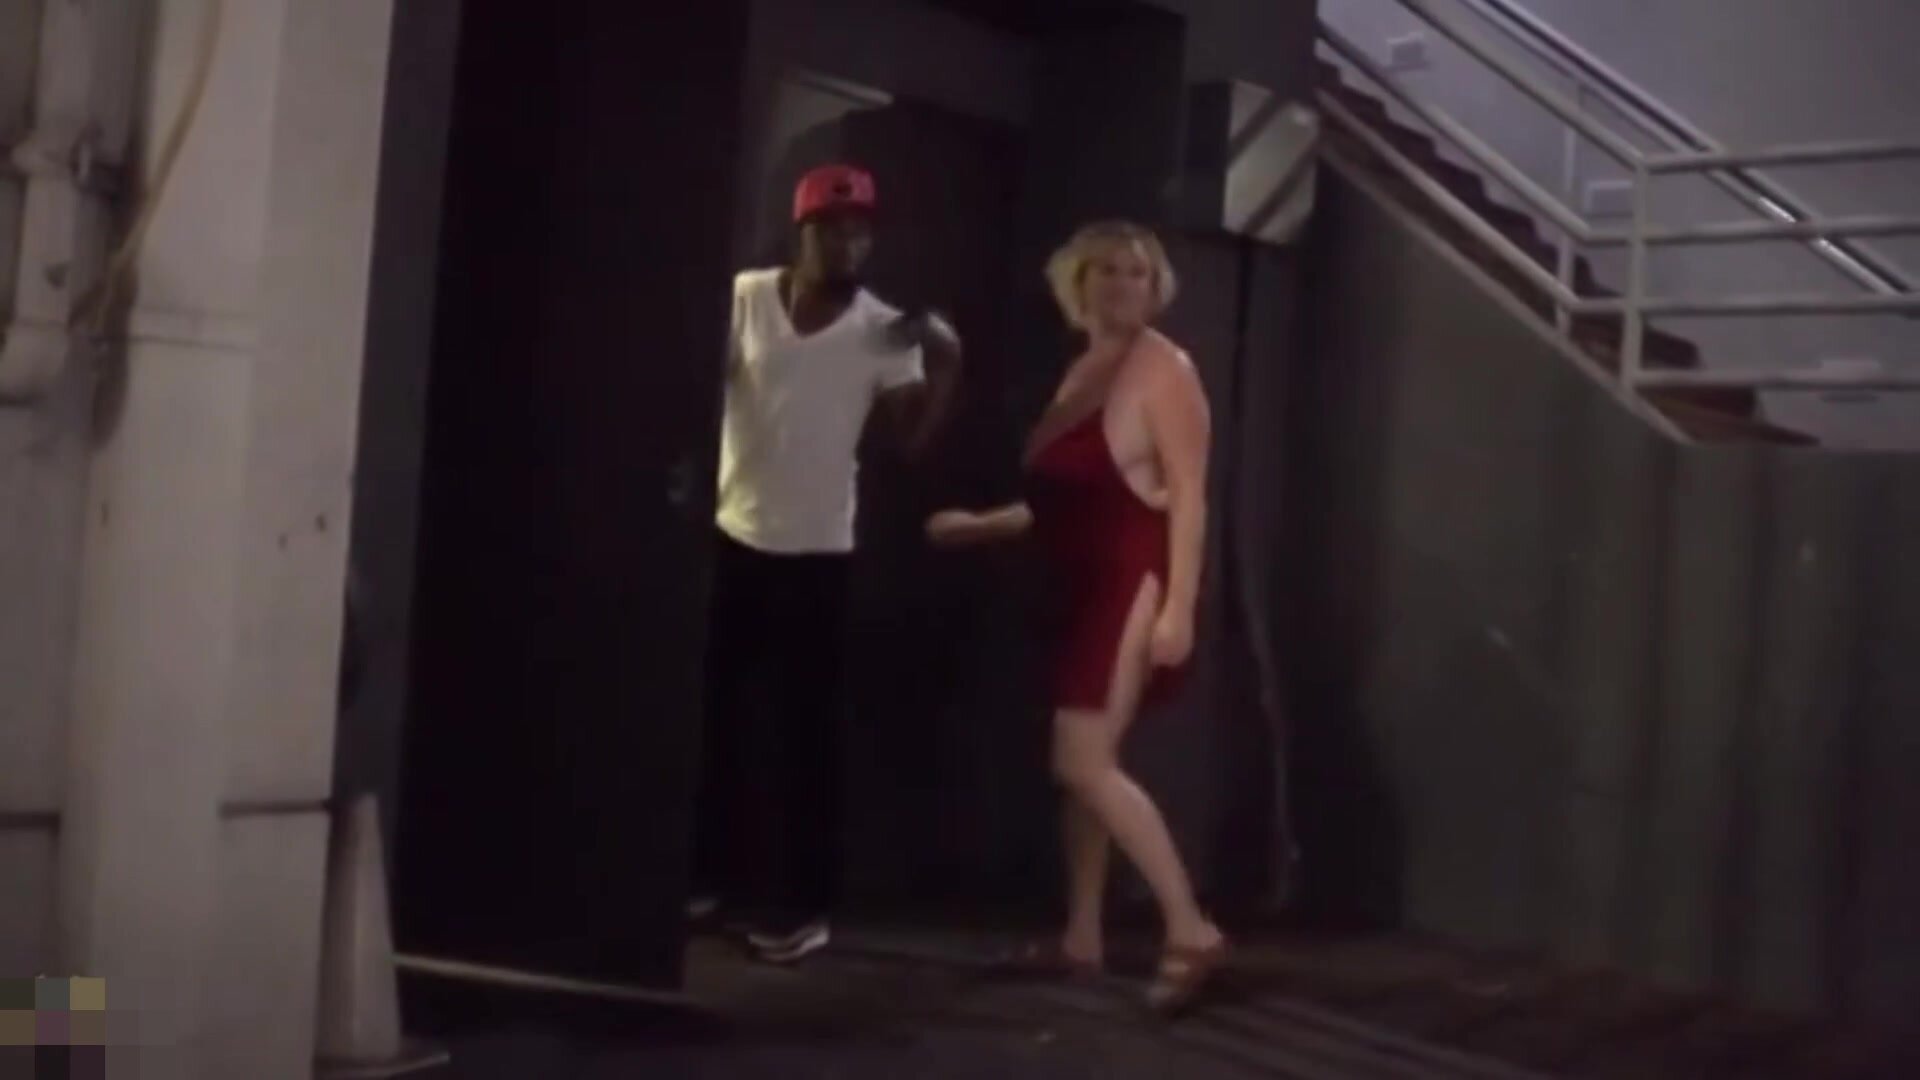 Blonde Women Fucking a Black Man in Public Places